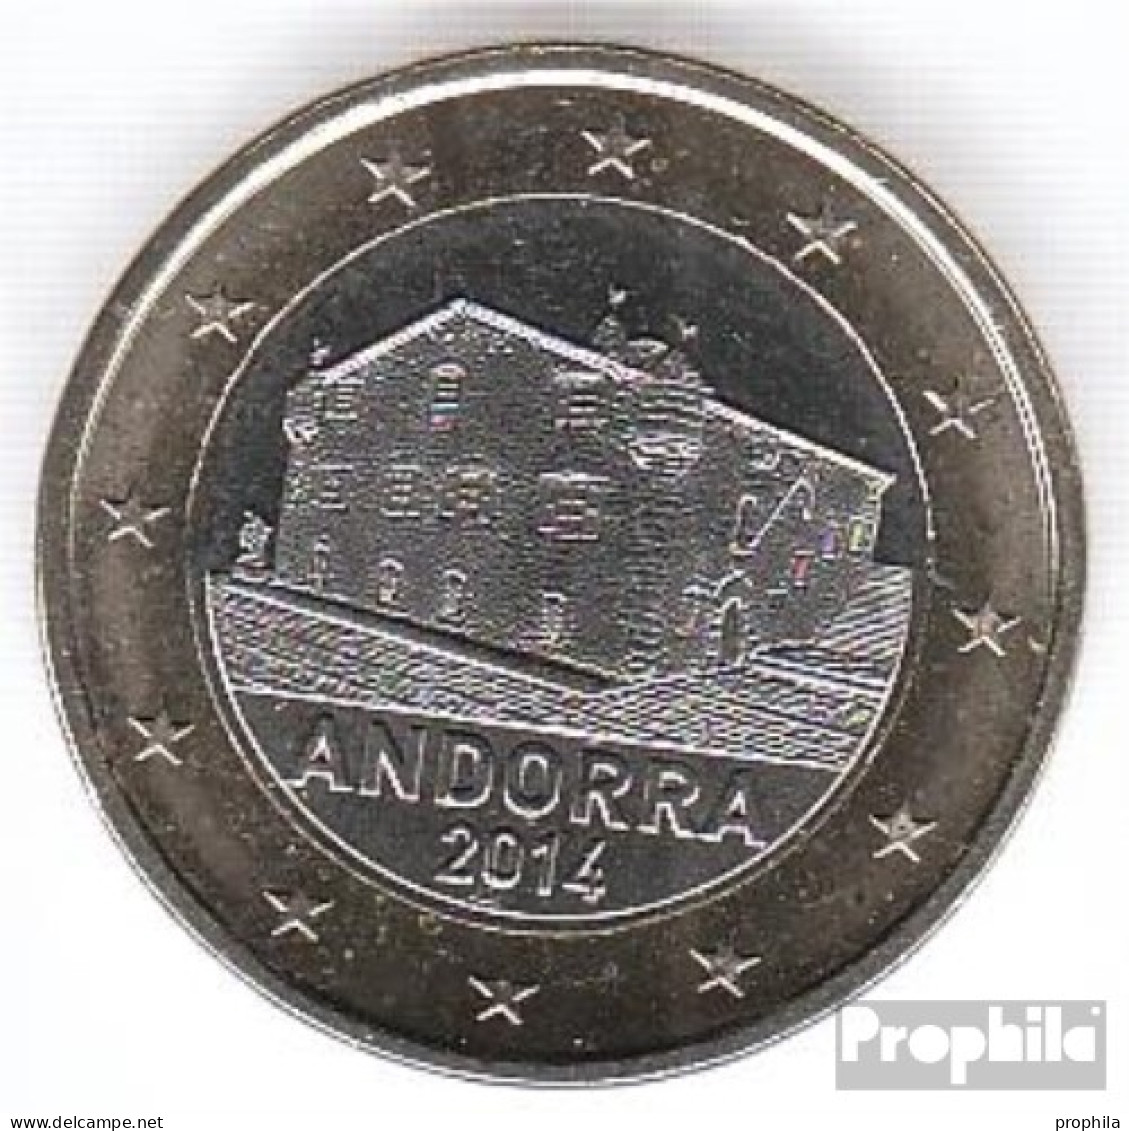 Andorra AND 7 2014 Stgl./unzirkuliert 2014 1 Euro Kursmünze - Andorre